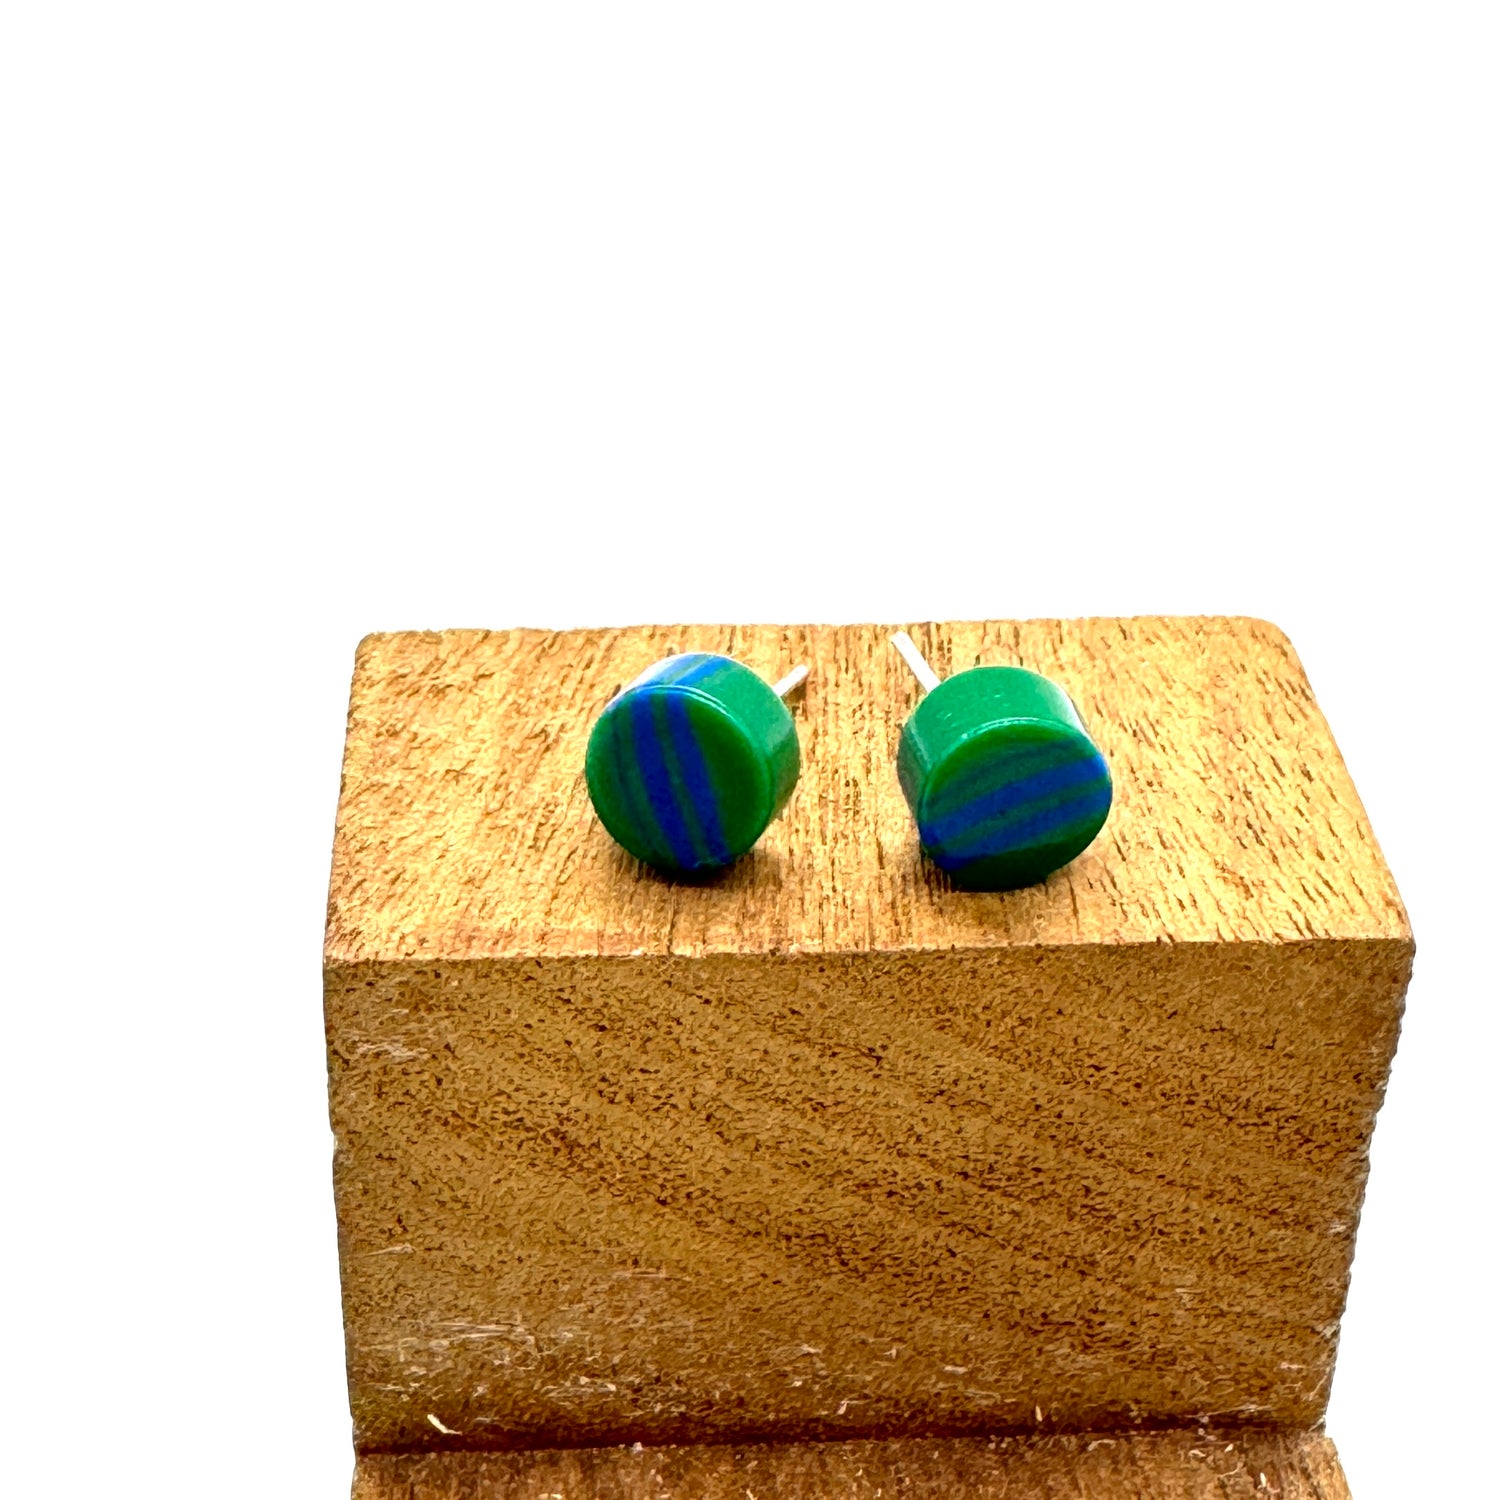 Green &amp; Blue Stripe Cane Slice Stud Earrings